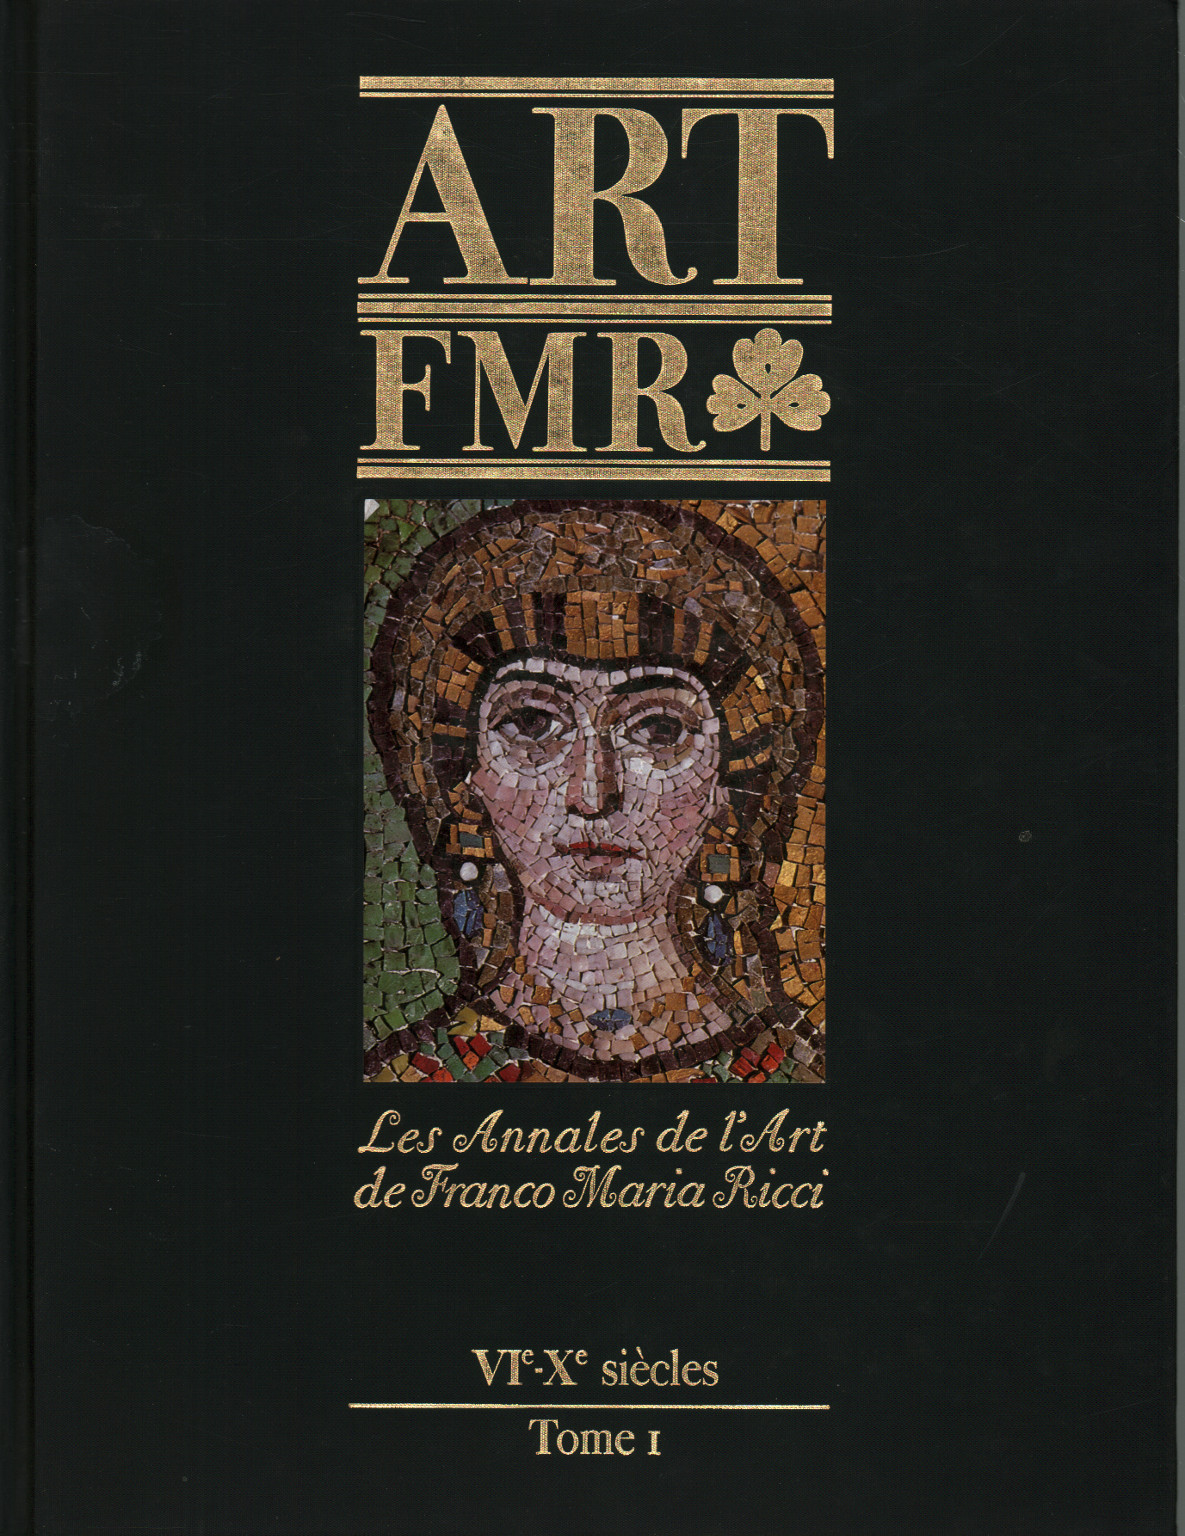 Art FMR-VI-X siècles. Tome I, s.zu.